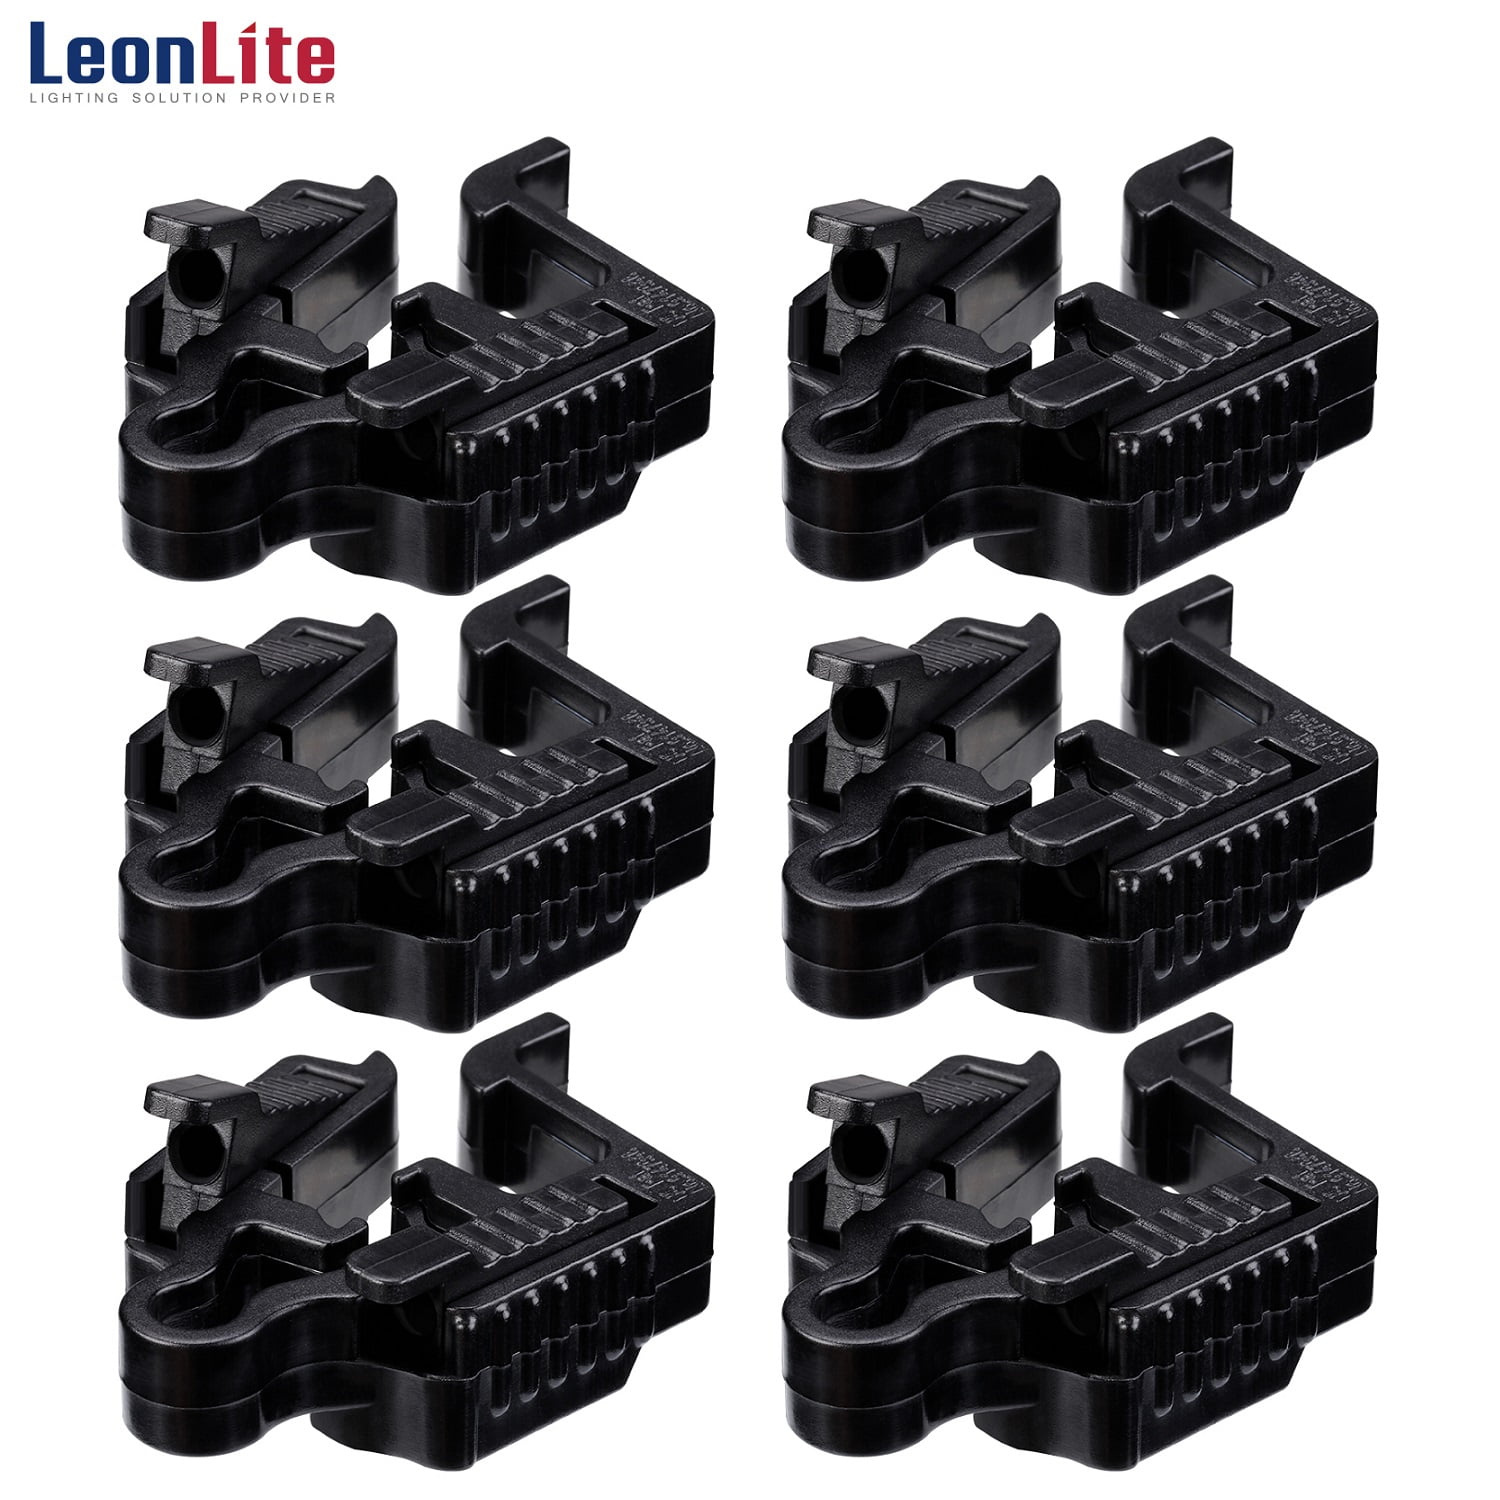 leonlite 6 pack ul listed cable connectors for low voltage landscape lighting landscape wire splice connectors wire clip connector accessory